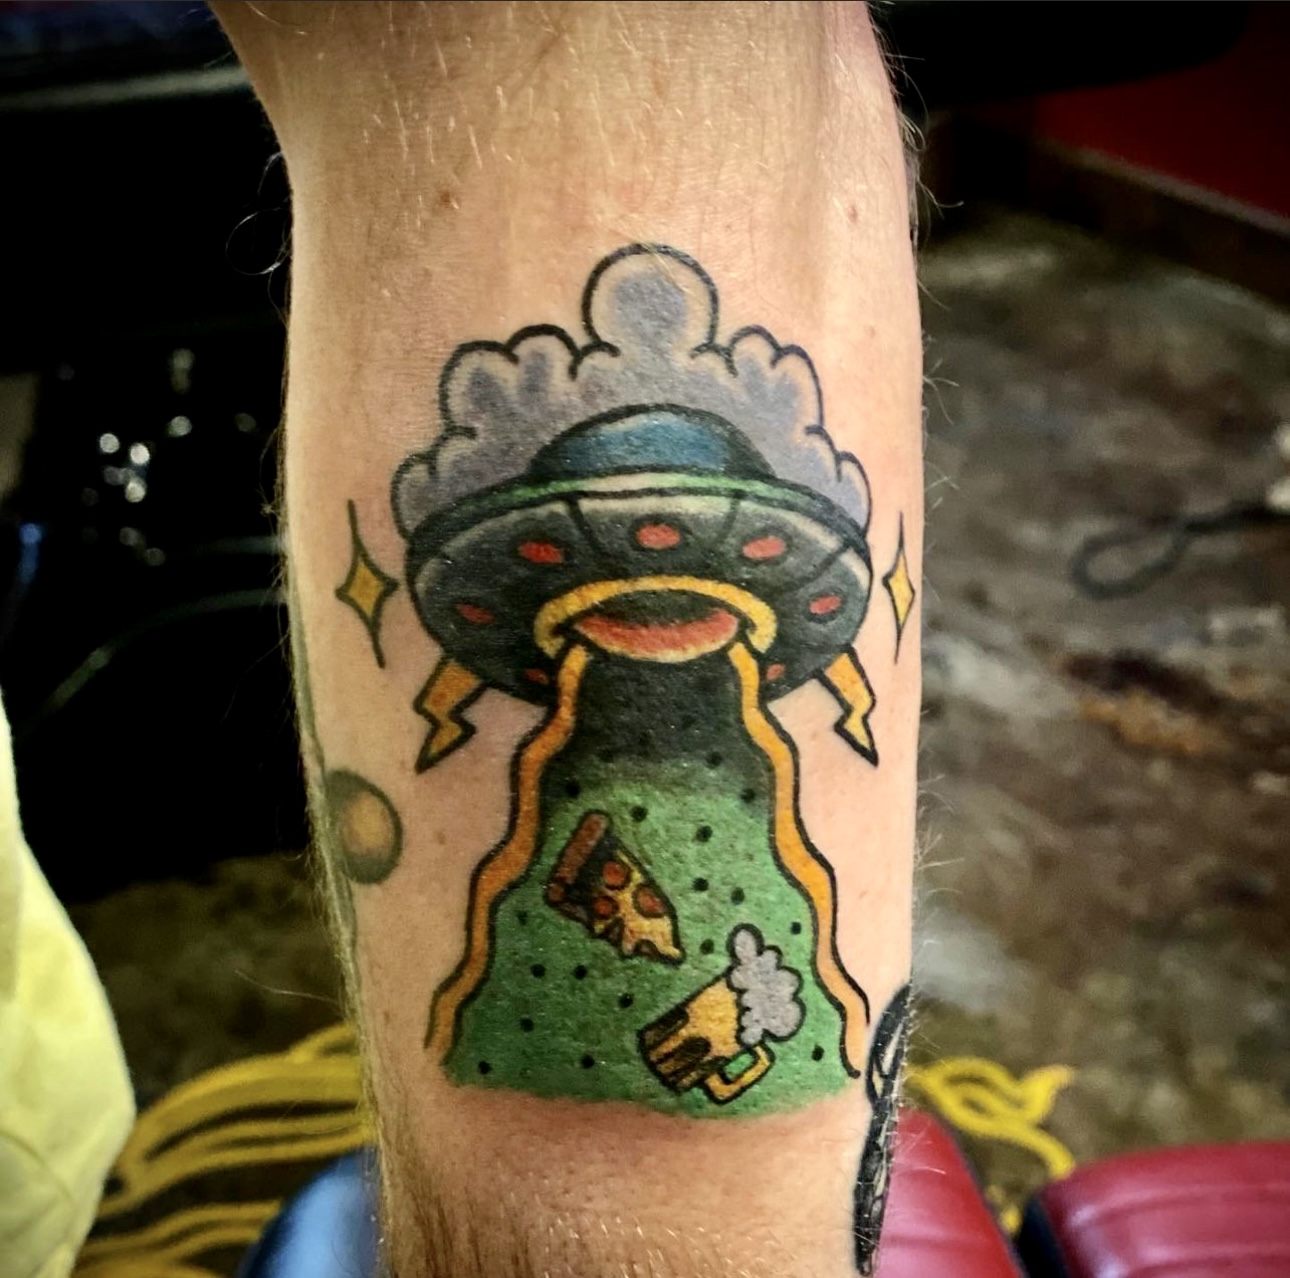 Tattoo of a spaceship